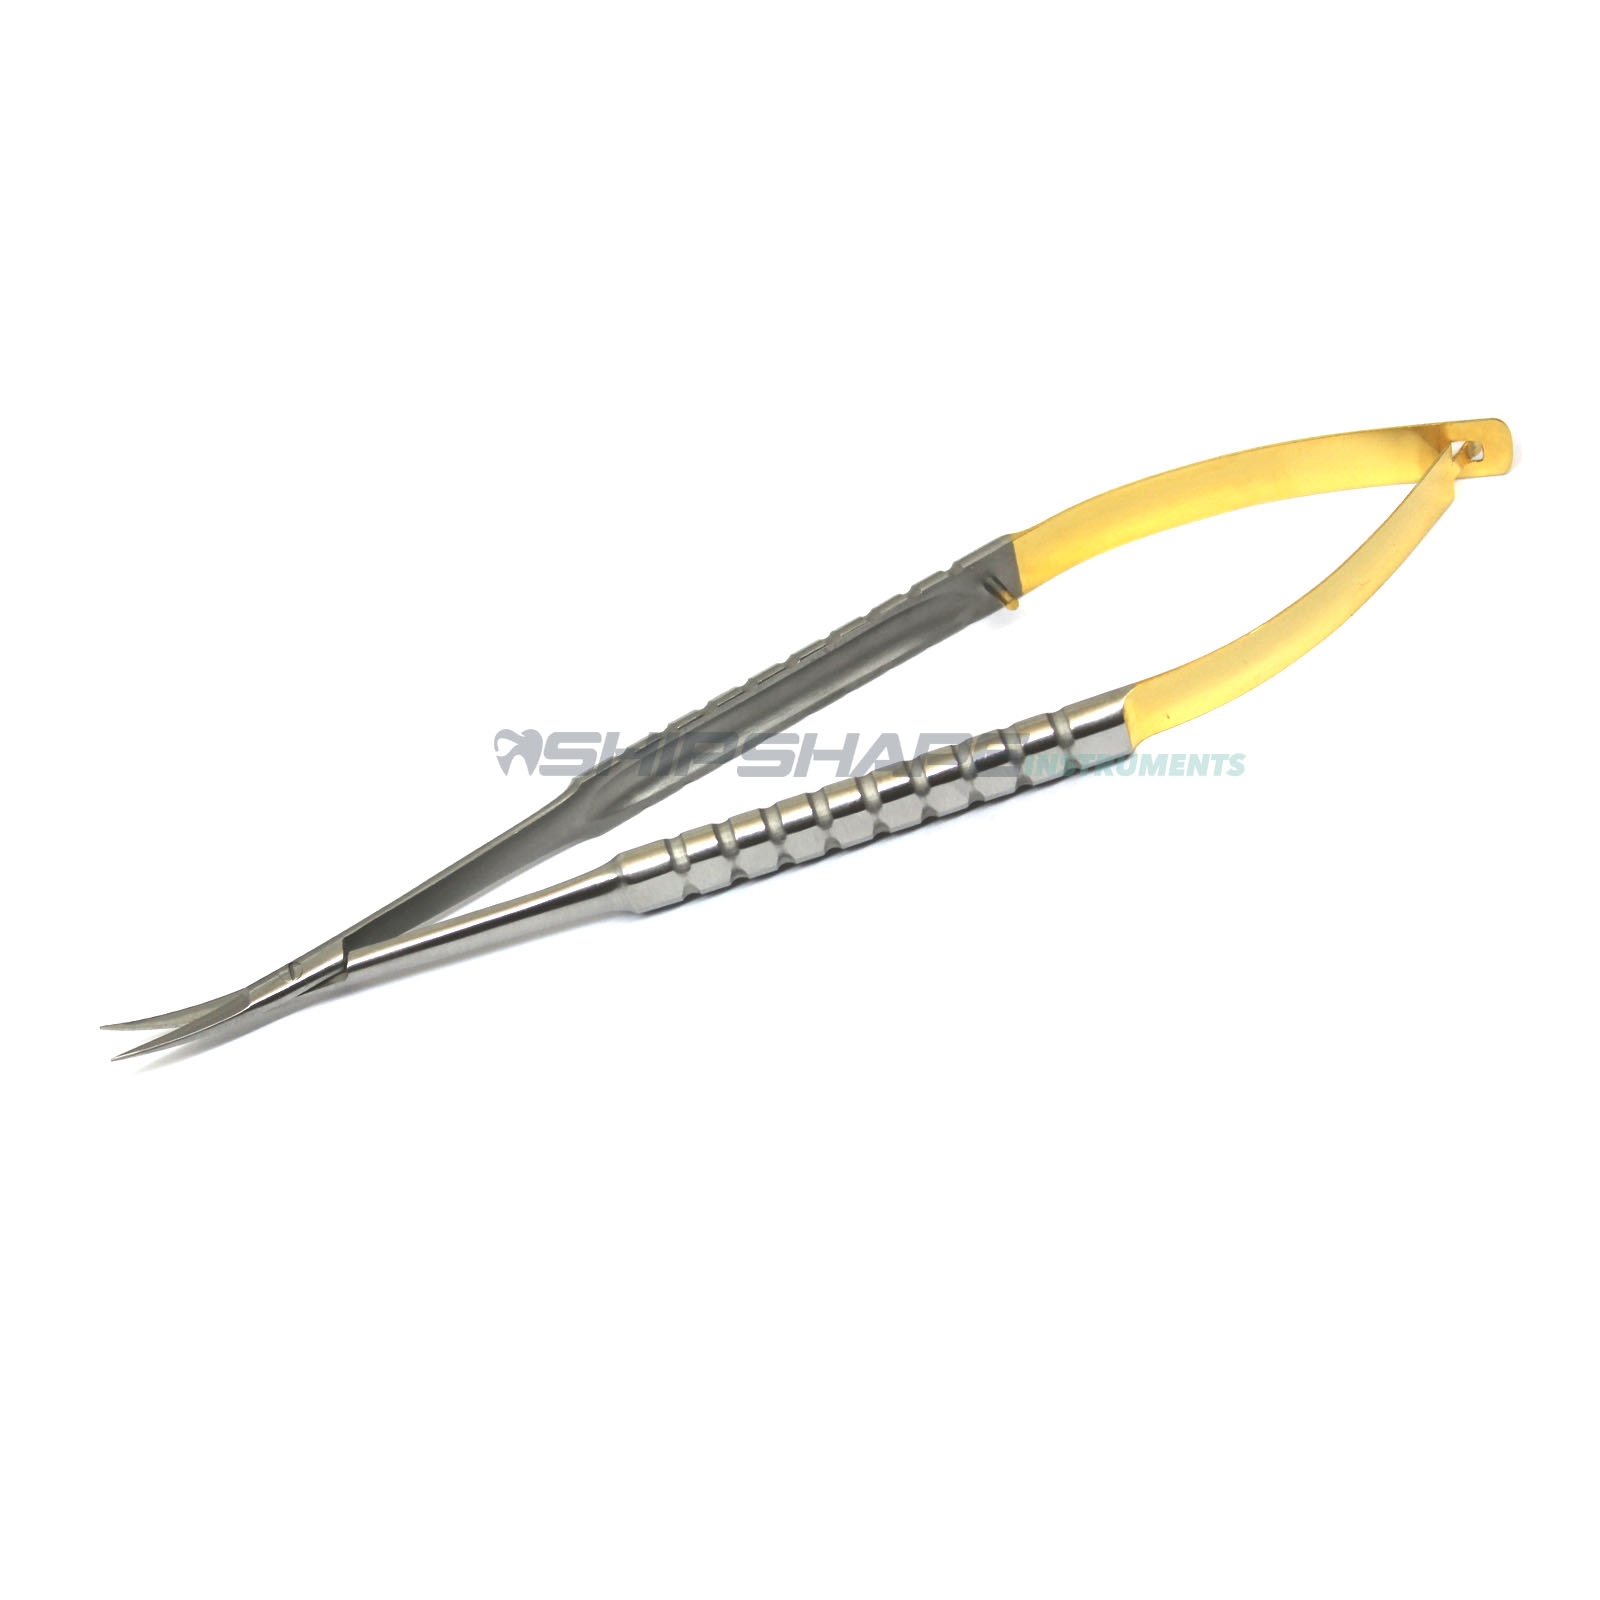 Castroviejo Needle Holder with Lock, Micro Spring Scissor, Gerald Tissue Forcep Dental Steel Instruments-1205